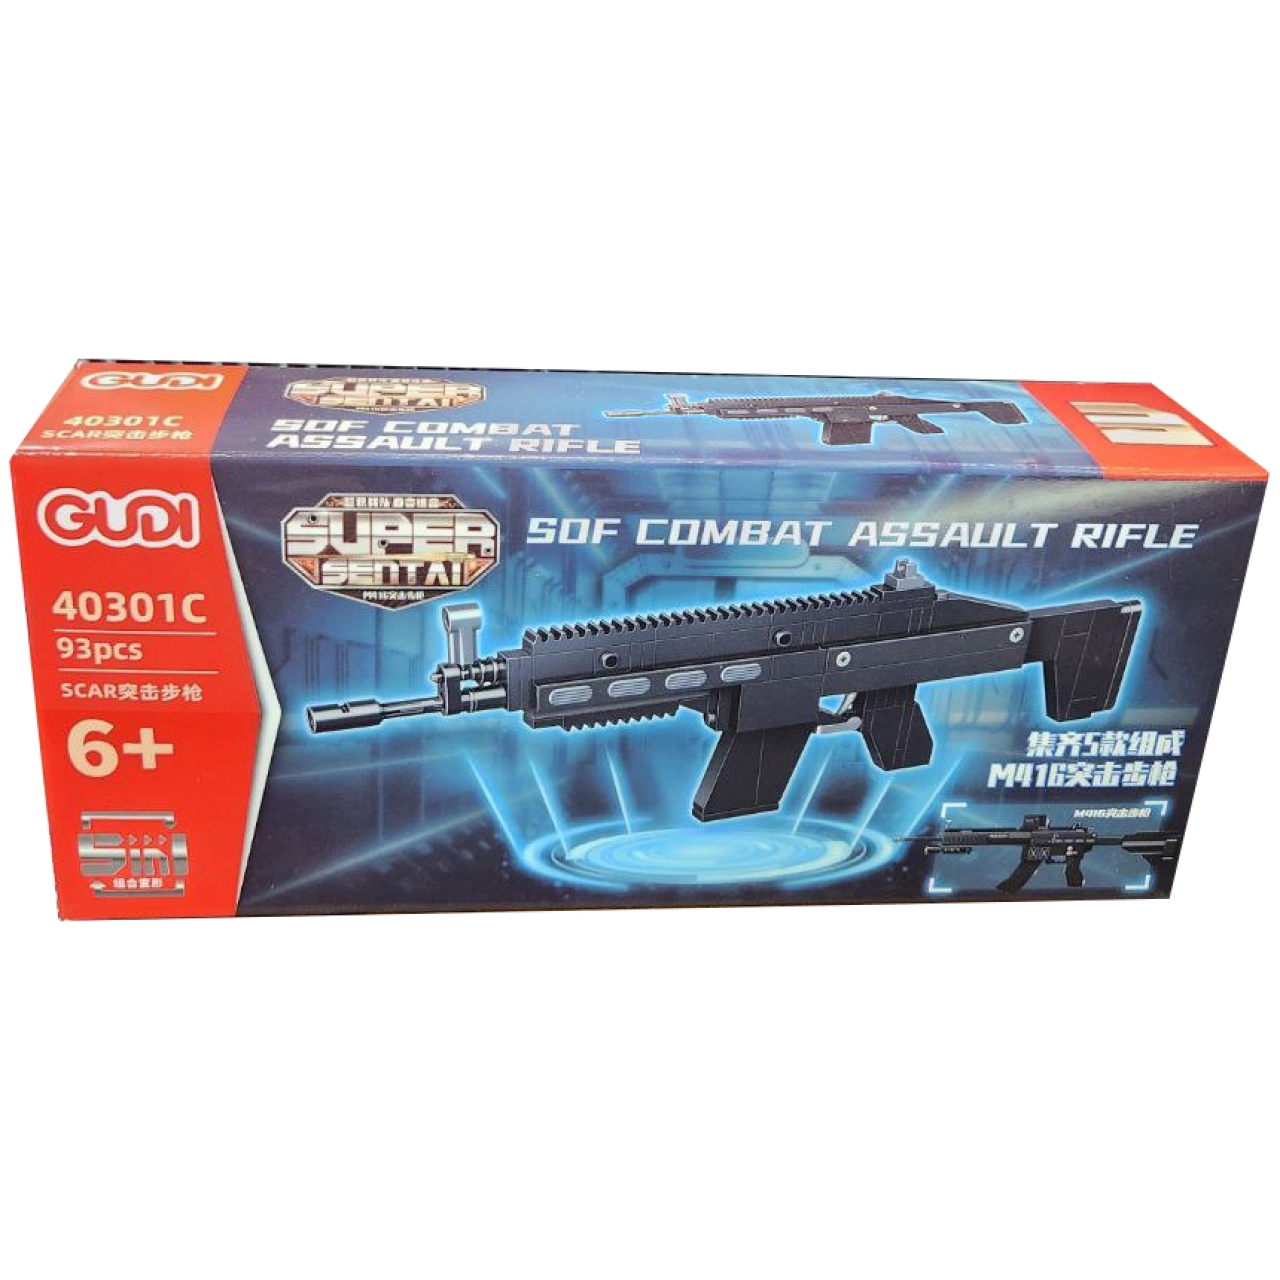 ساختنی گودی Sof Combat Assult Rifle کد 40301C